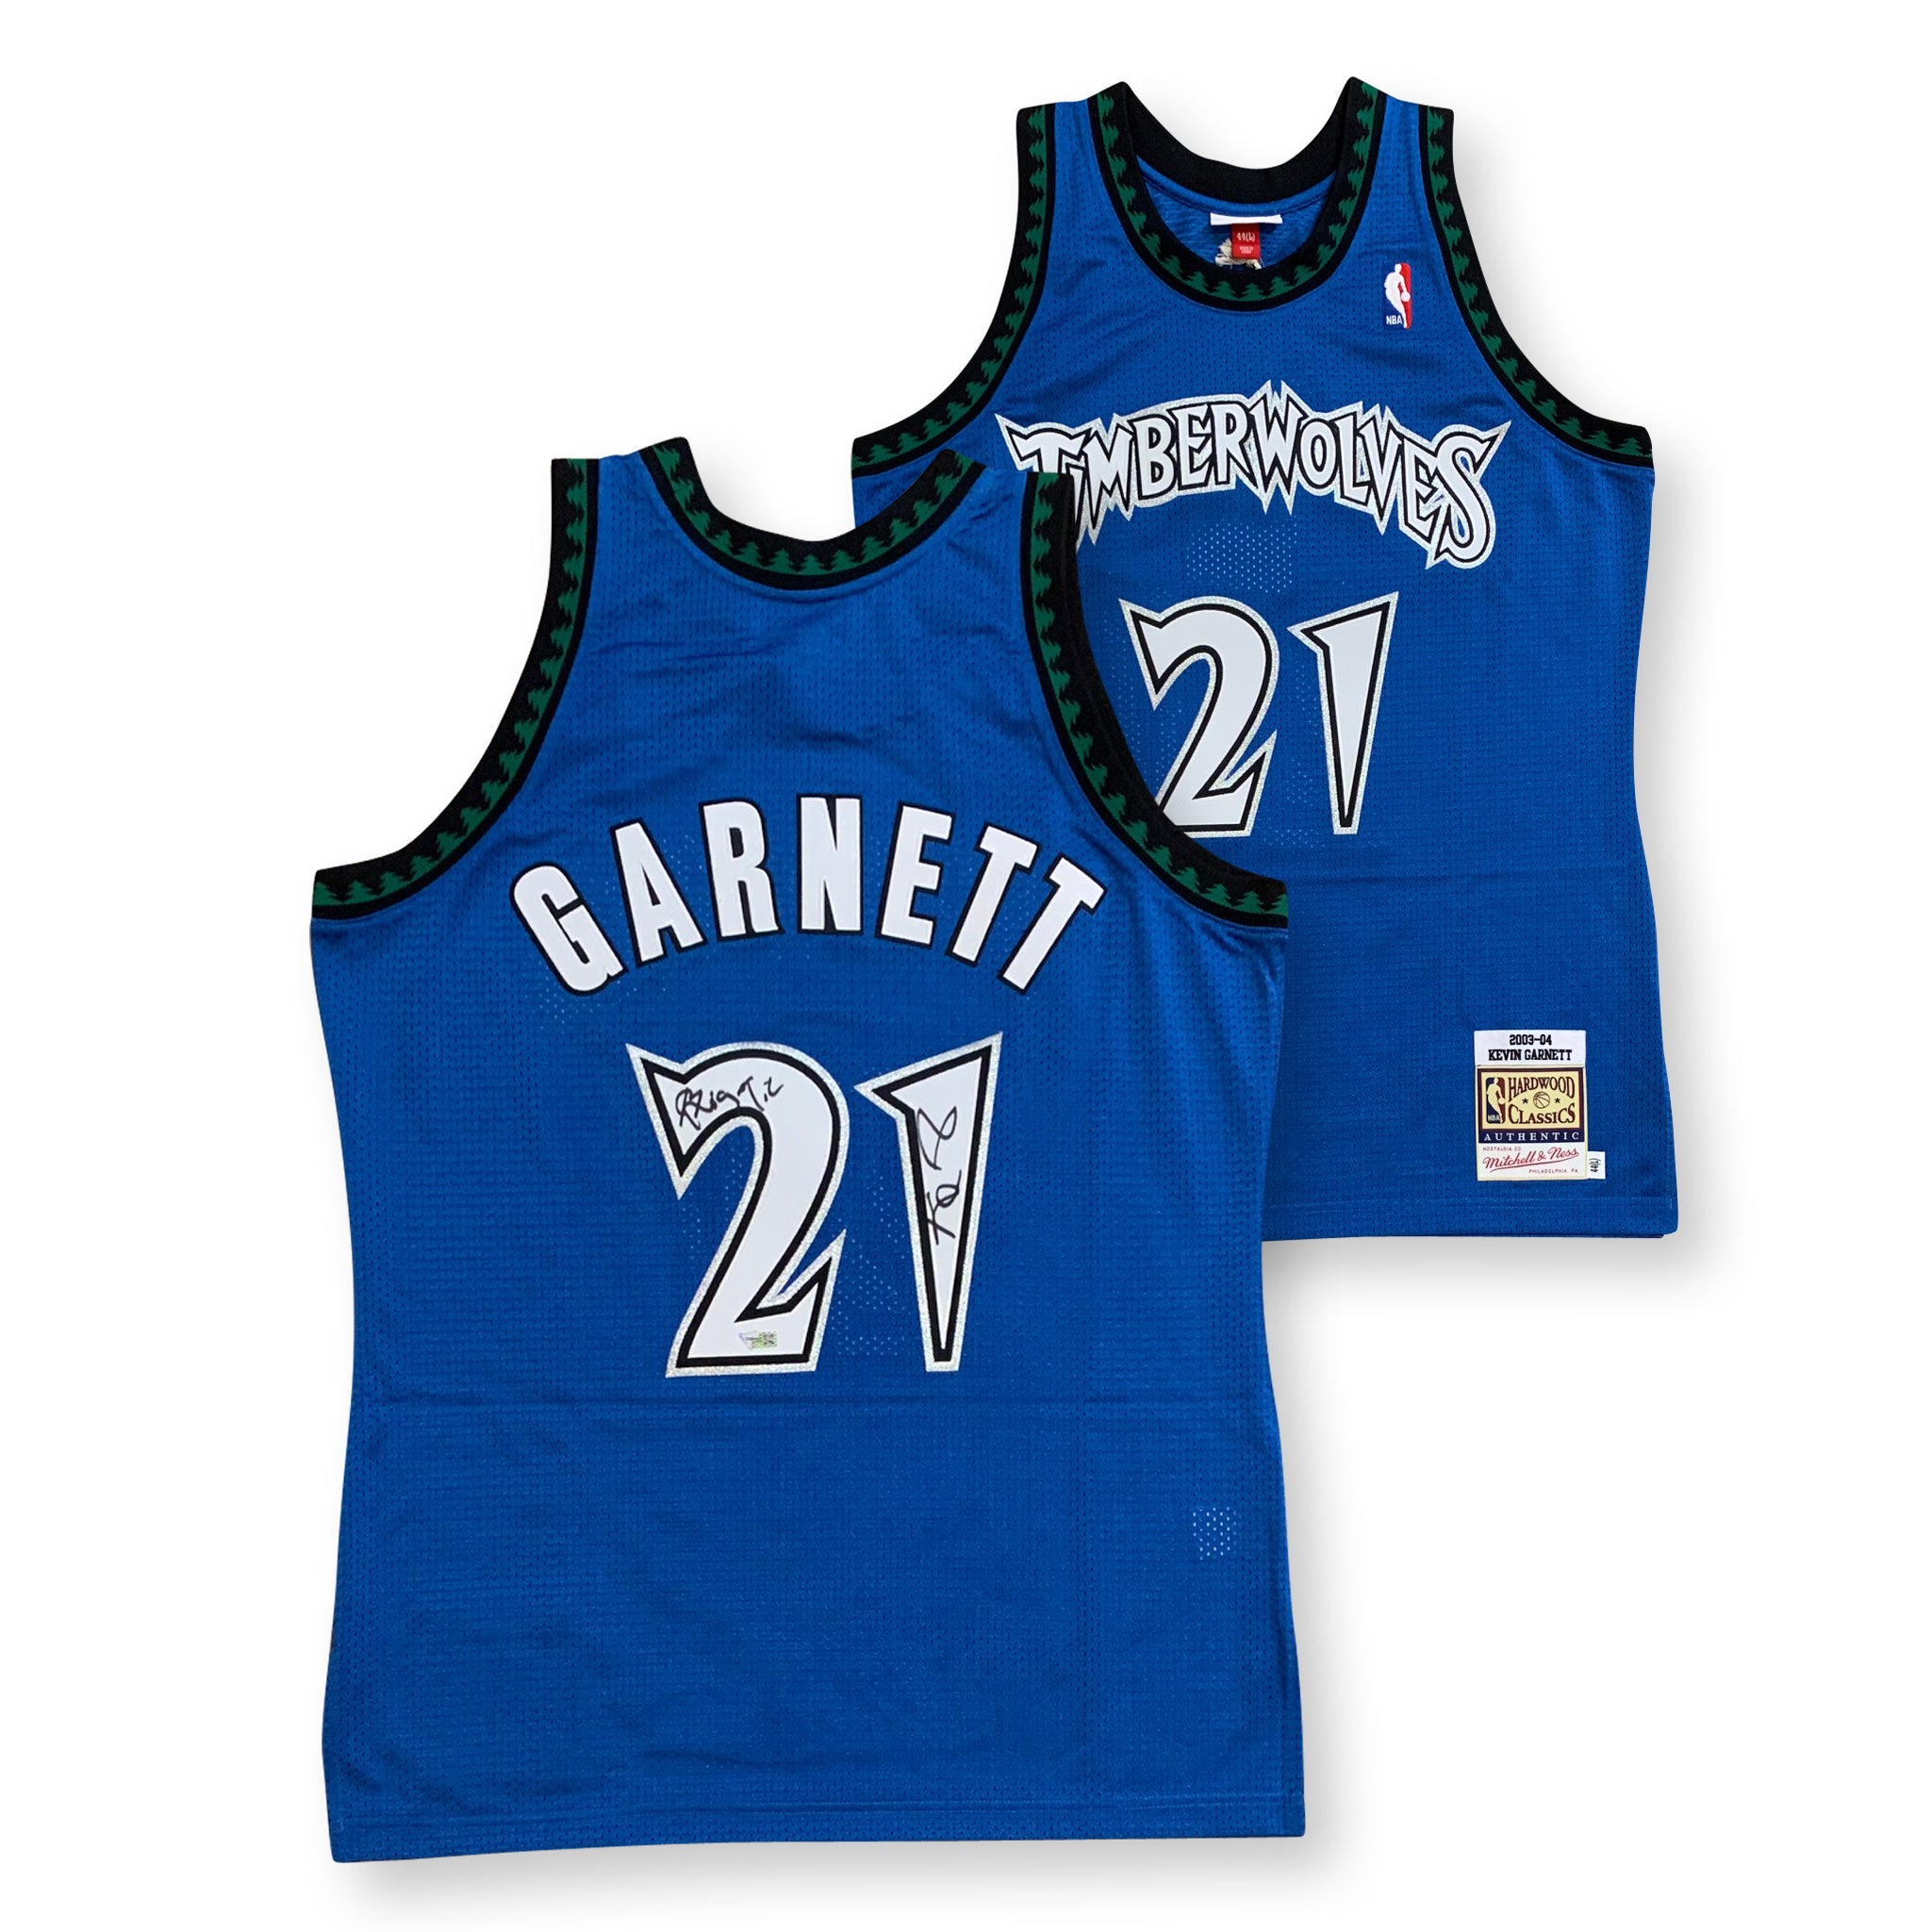 Kevin Garnett NBA Jerseys, NBA Uniforms, Jersey